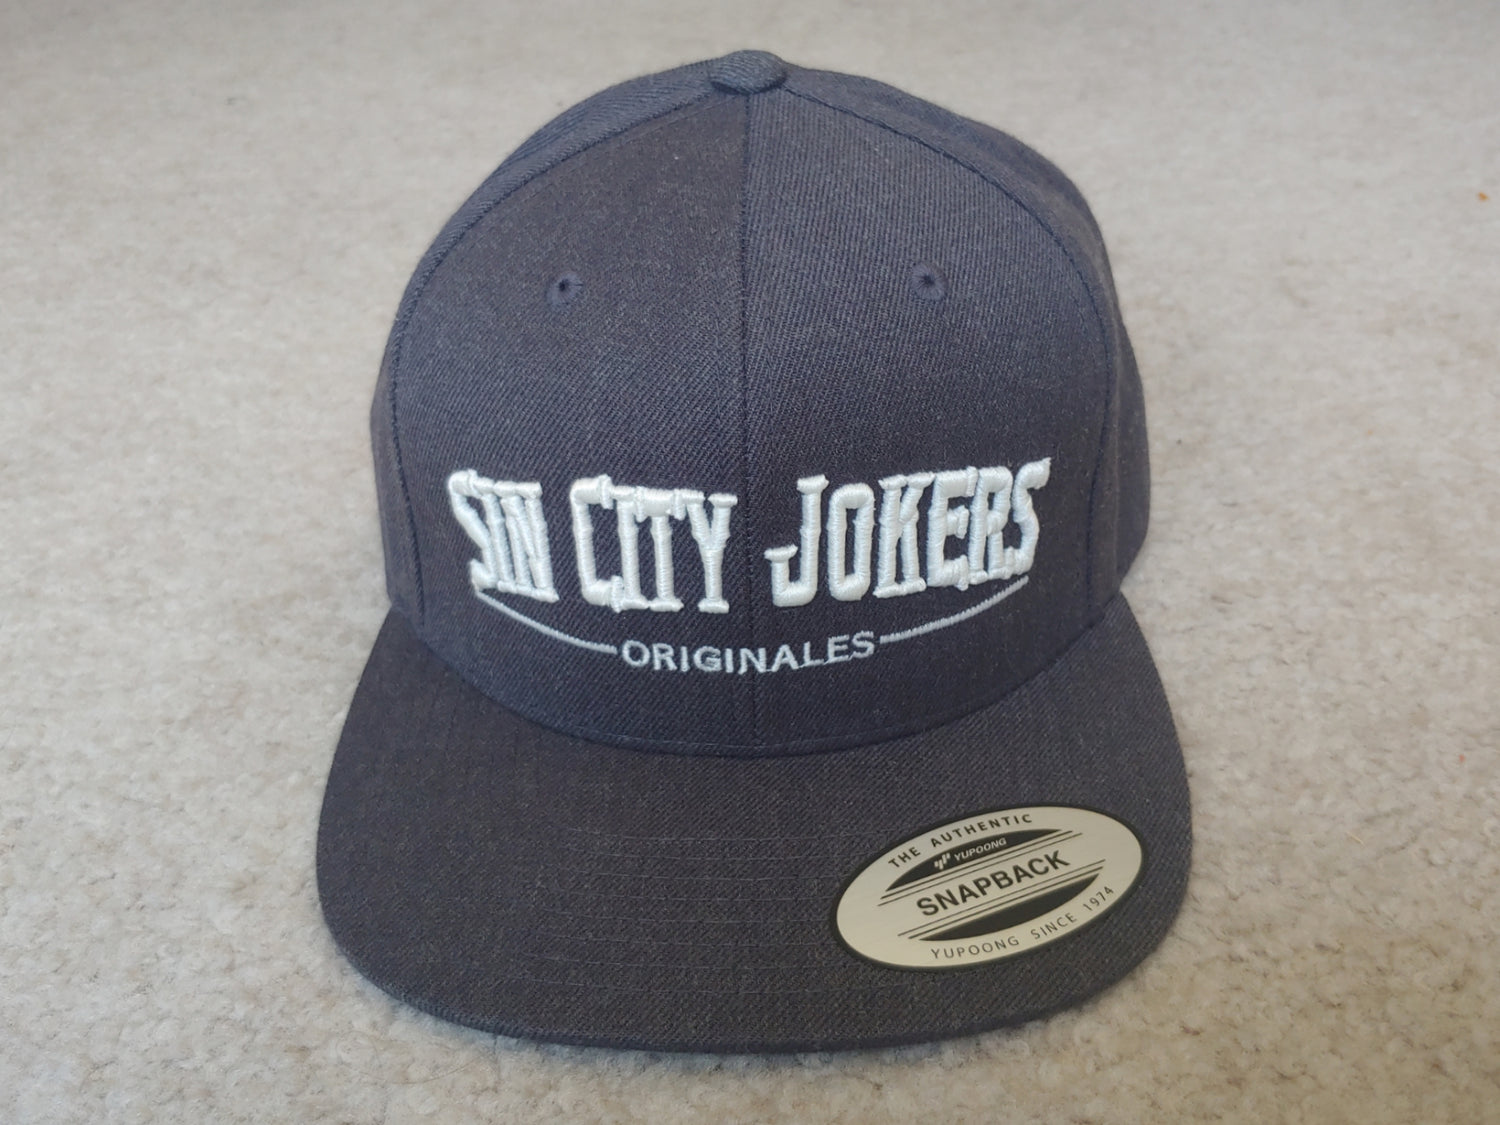 SCJ Originales Snapback (Charcoal Gray) - Sin City Jokers